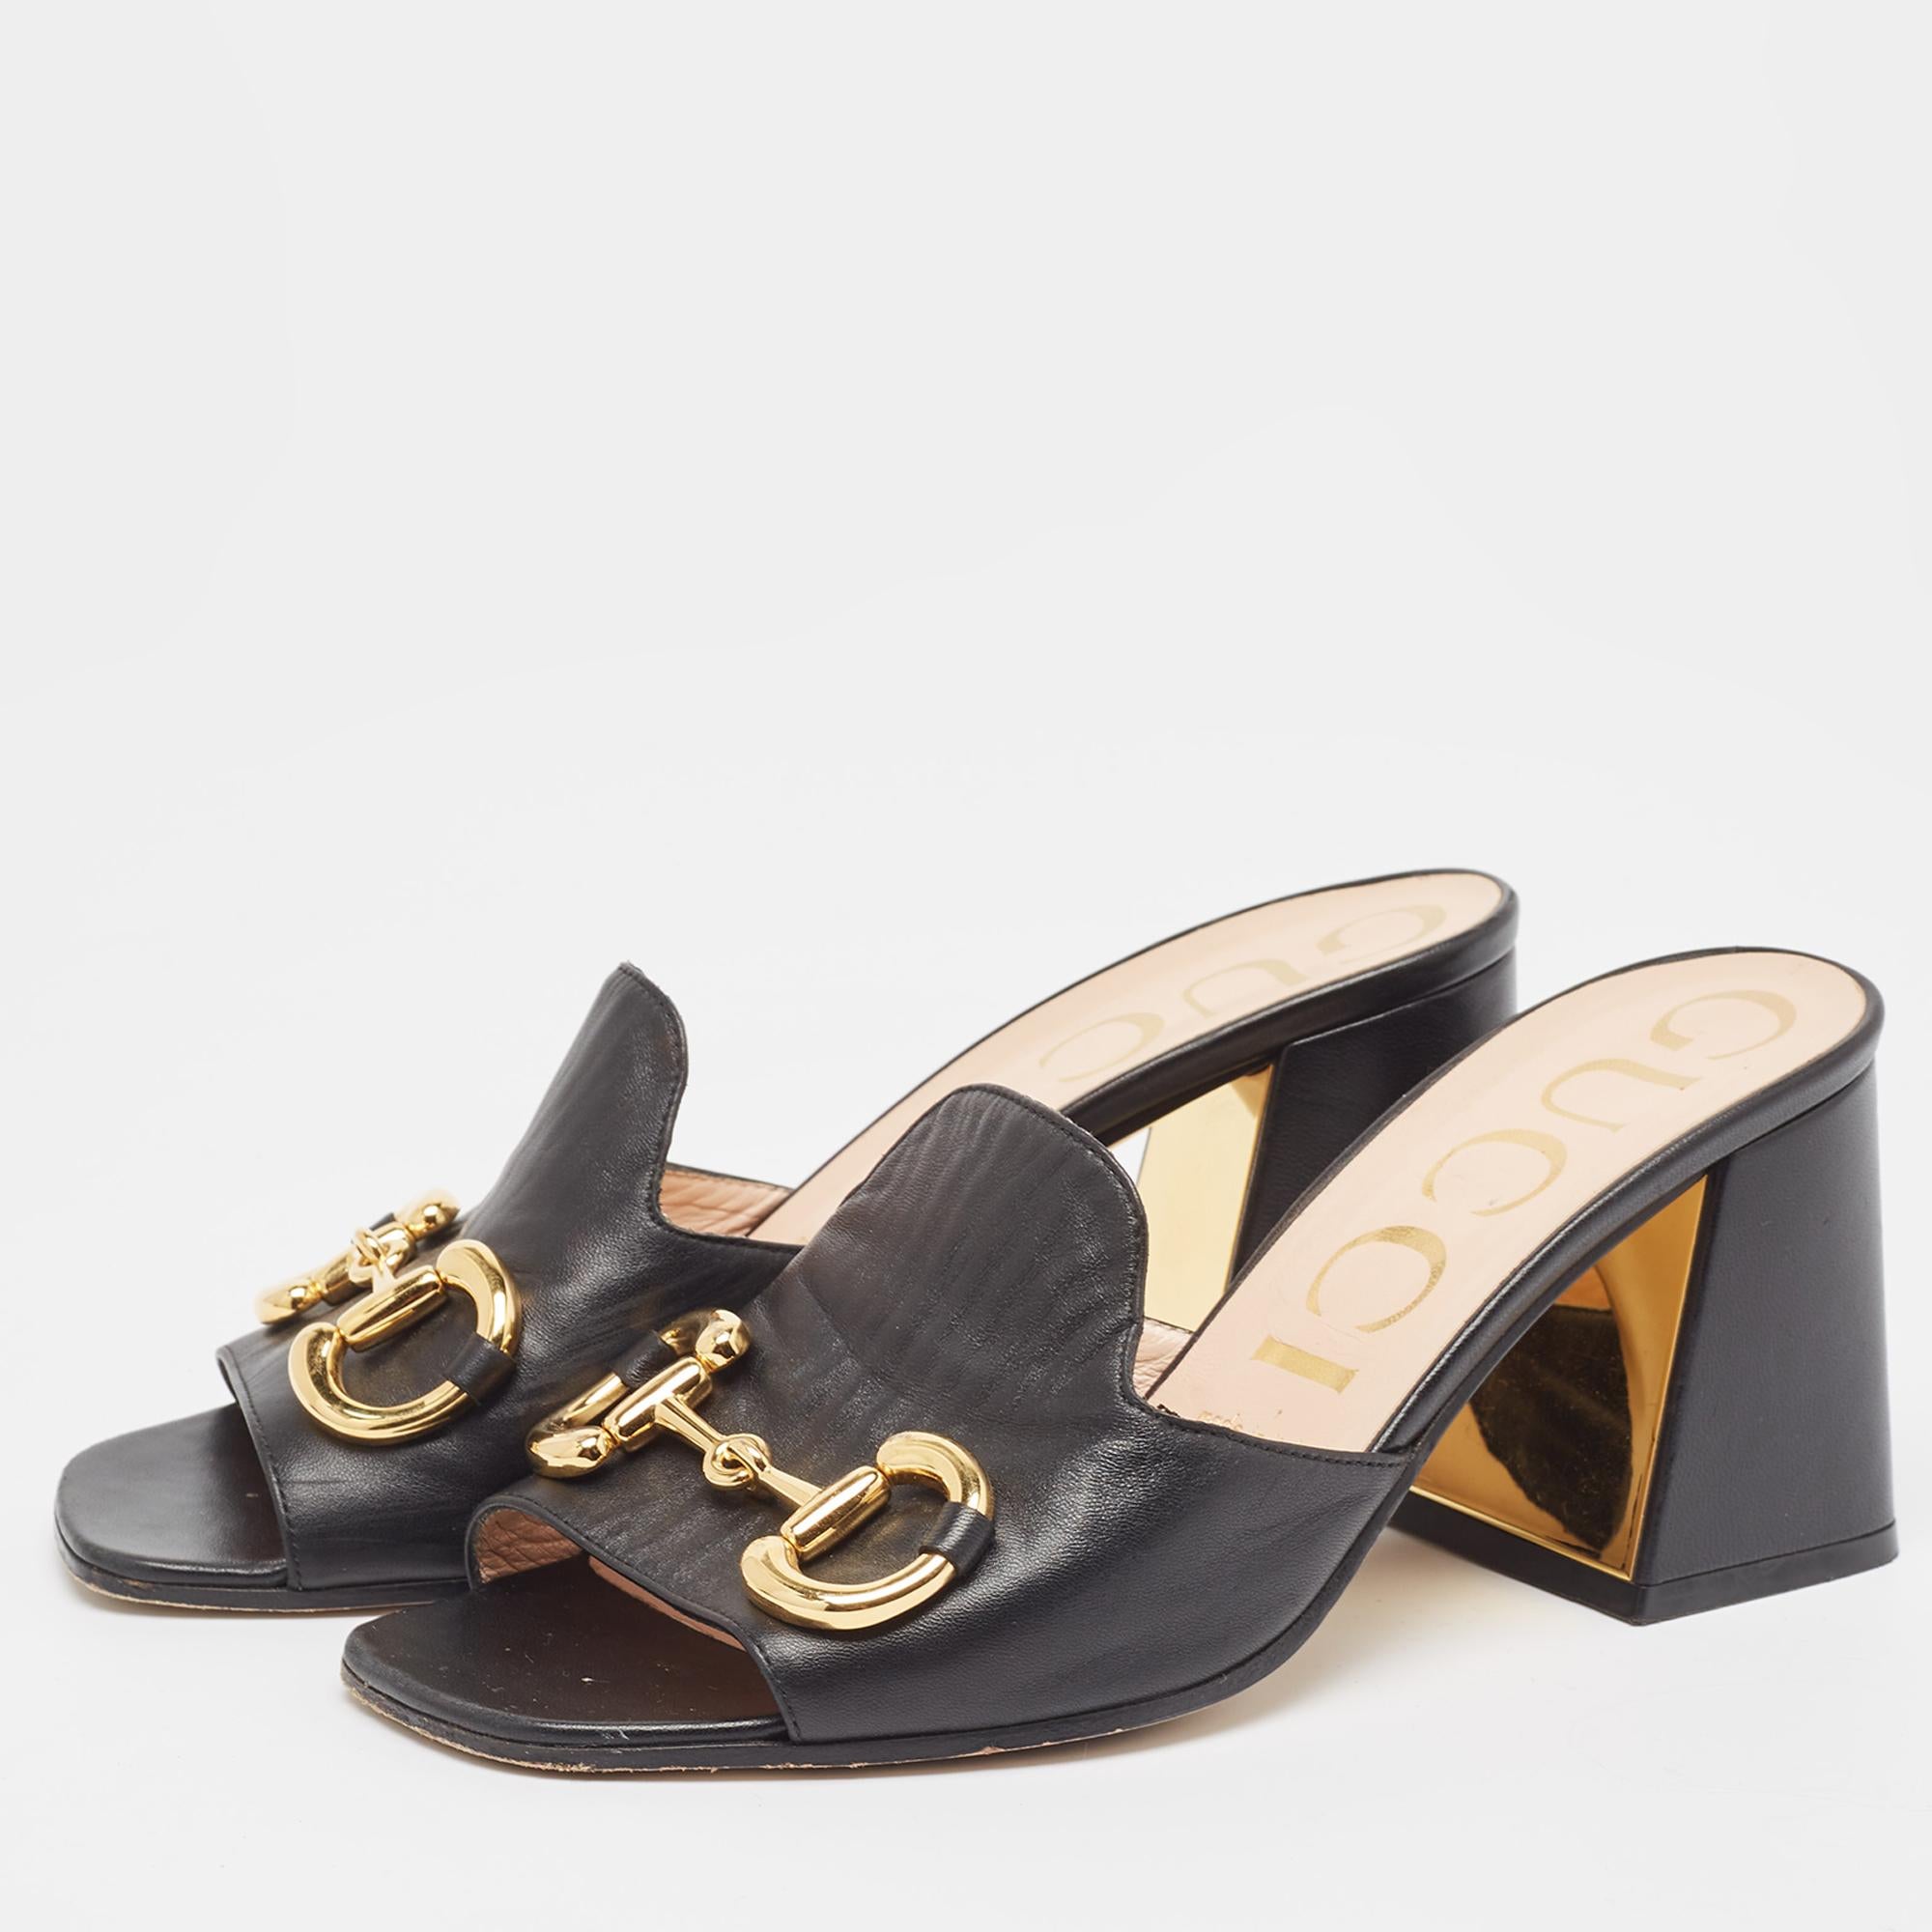 Gucci Back Leather Horsebit Slide Sandals Size 37.5 For Sale 4